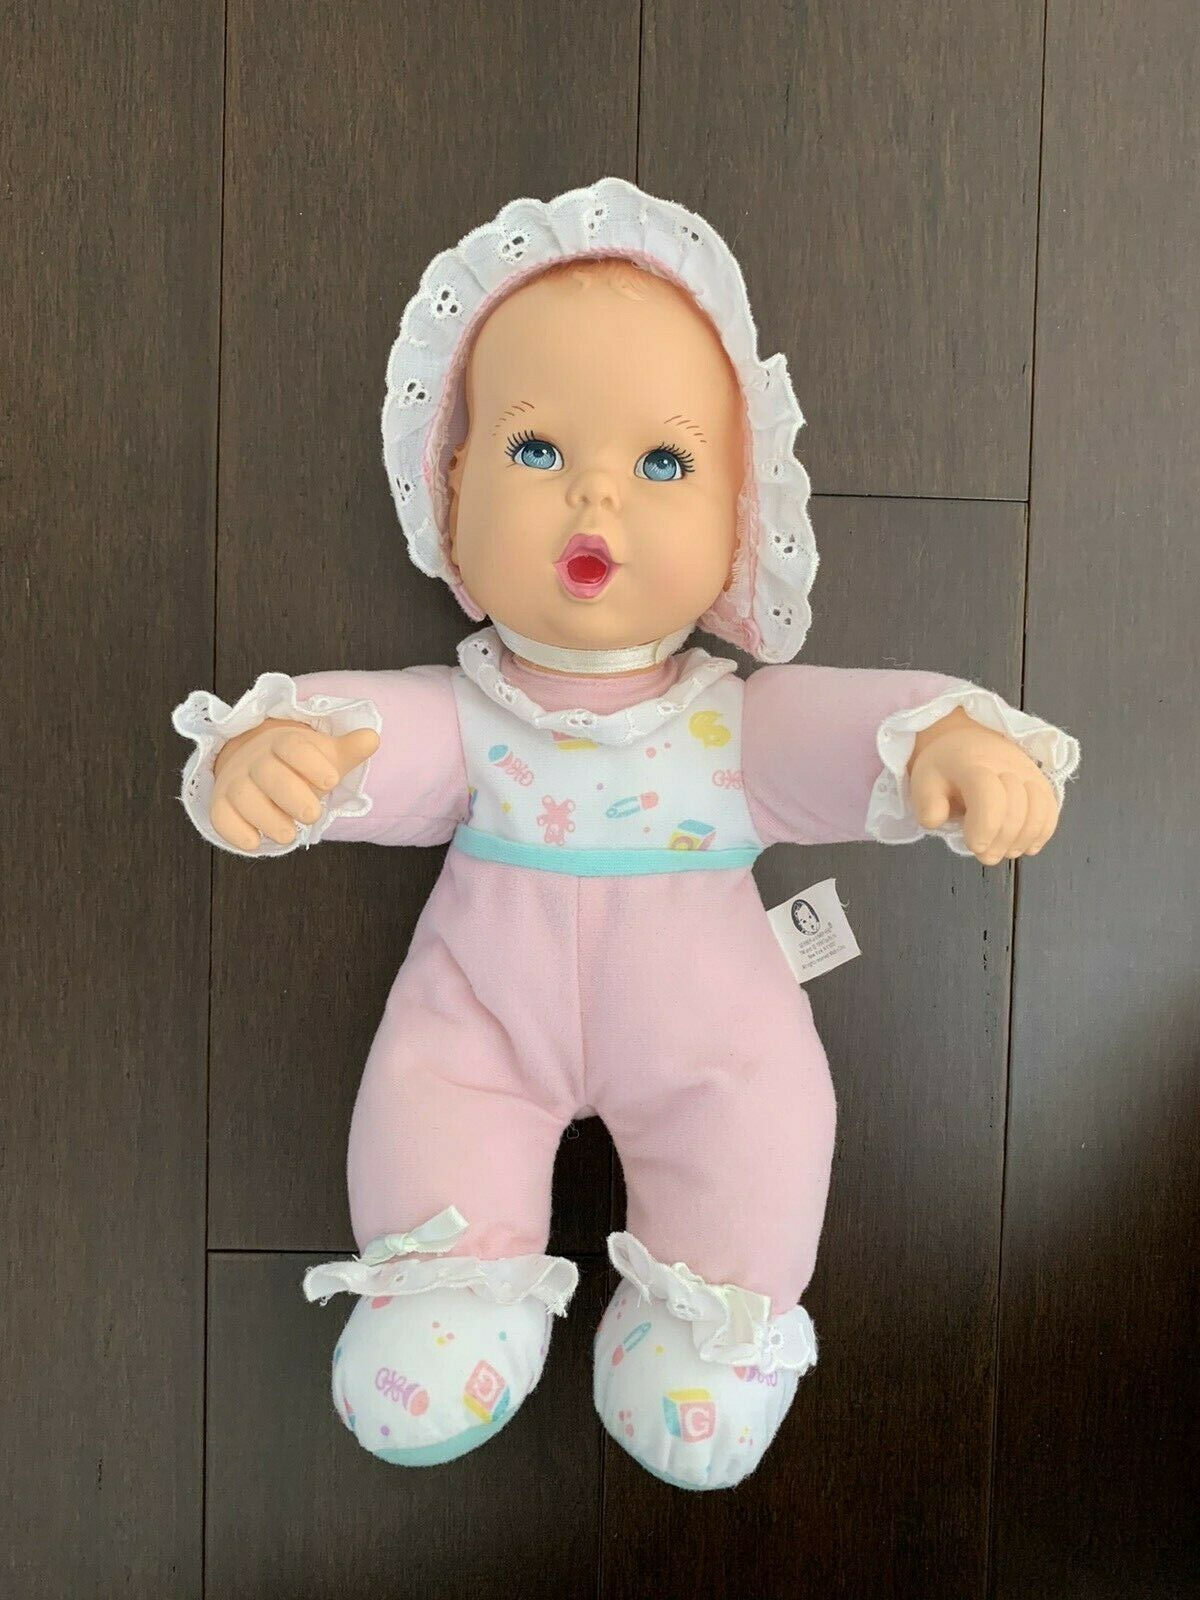 Vintage 1998 Toy Biz Gerber Head Baby Doll Soft Body Vinyl Head & Hands